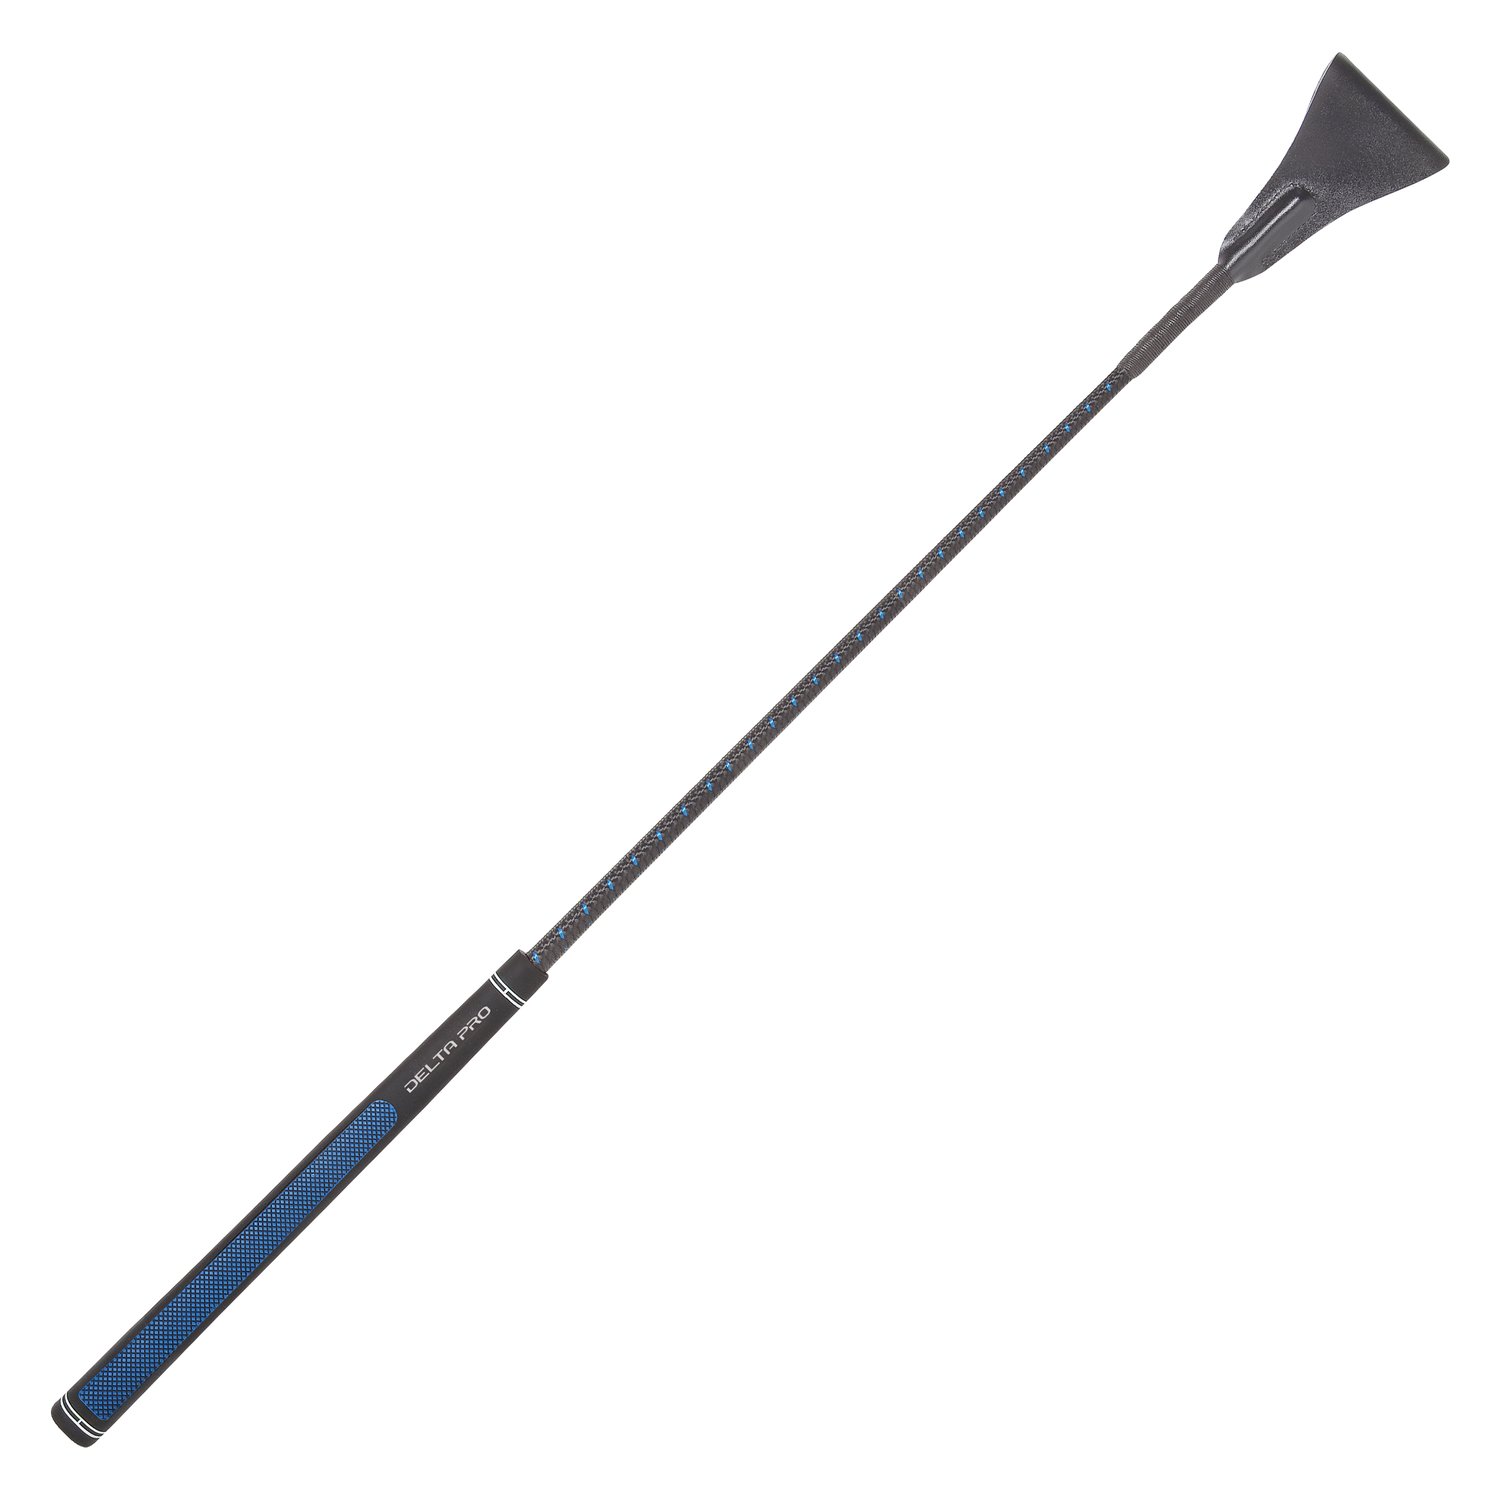 FLECK Springstock Delta Pro Griff Nylongespinst - schwarz-blau - 60 cm - 2